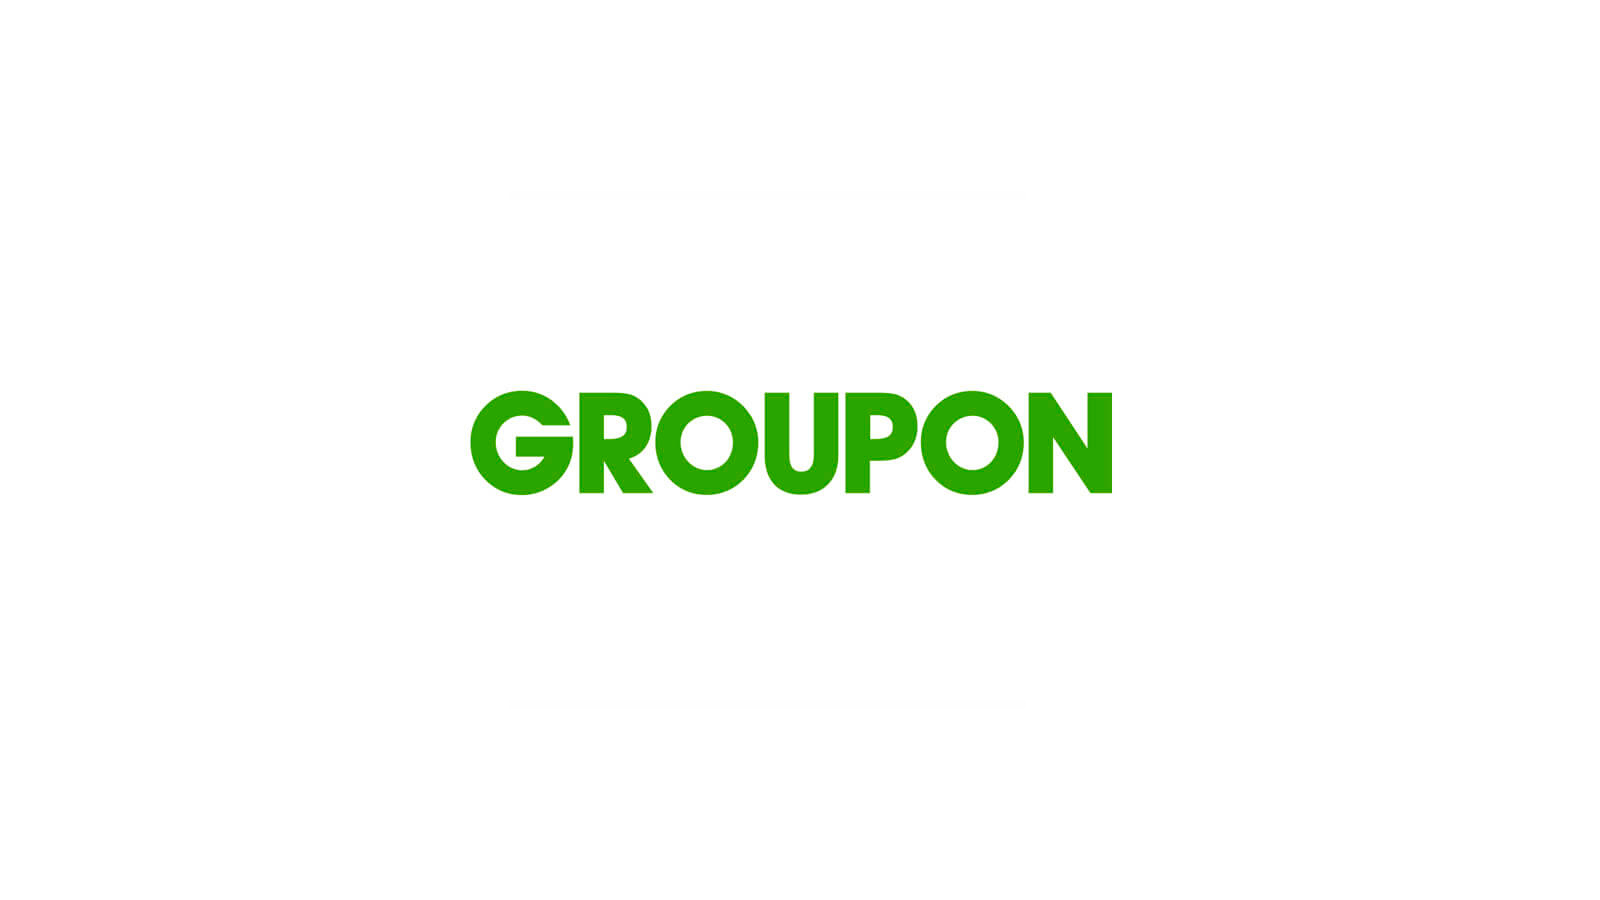 Partnership with Groupon UK